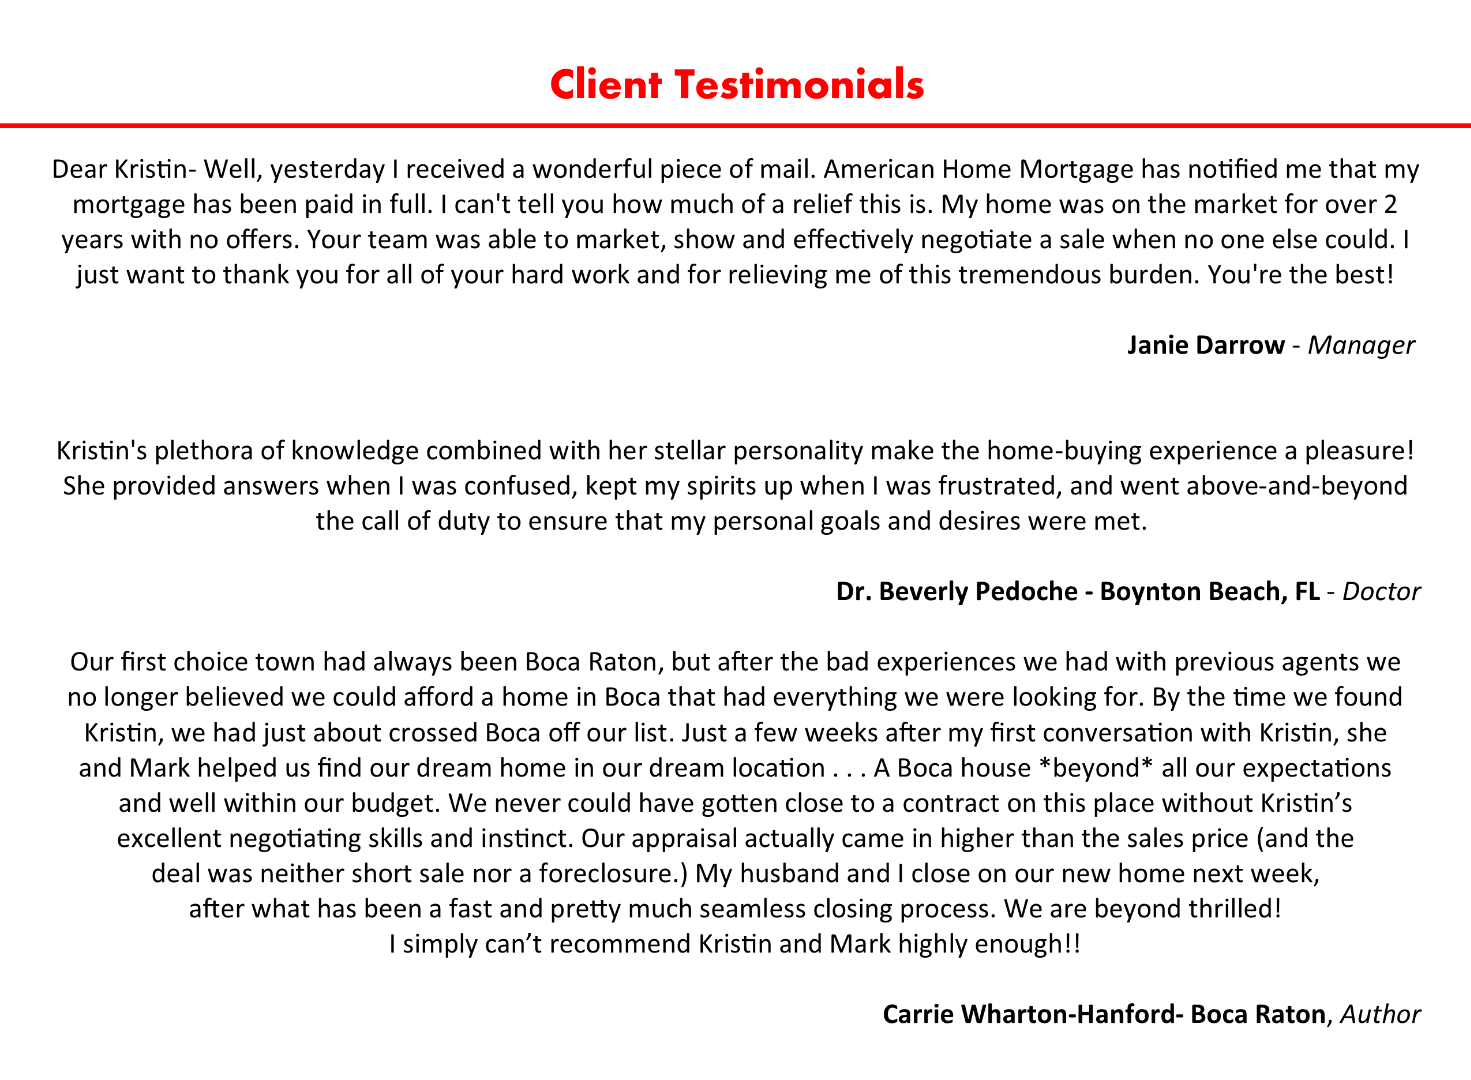 Client Testimonials v3.png